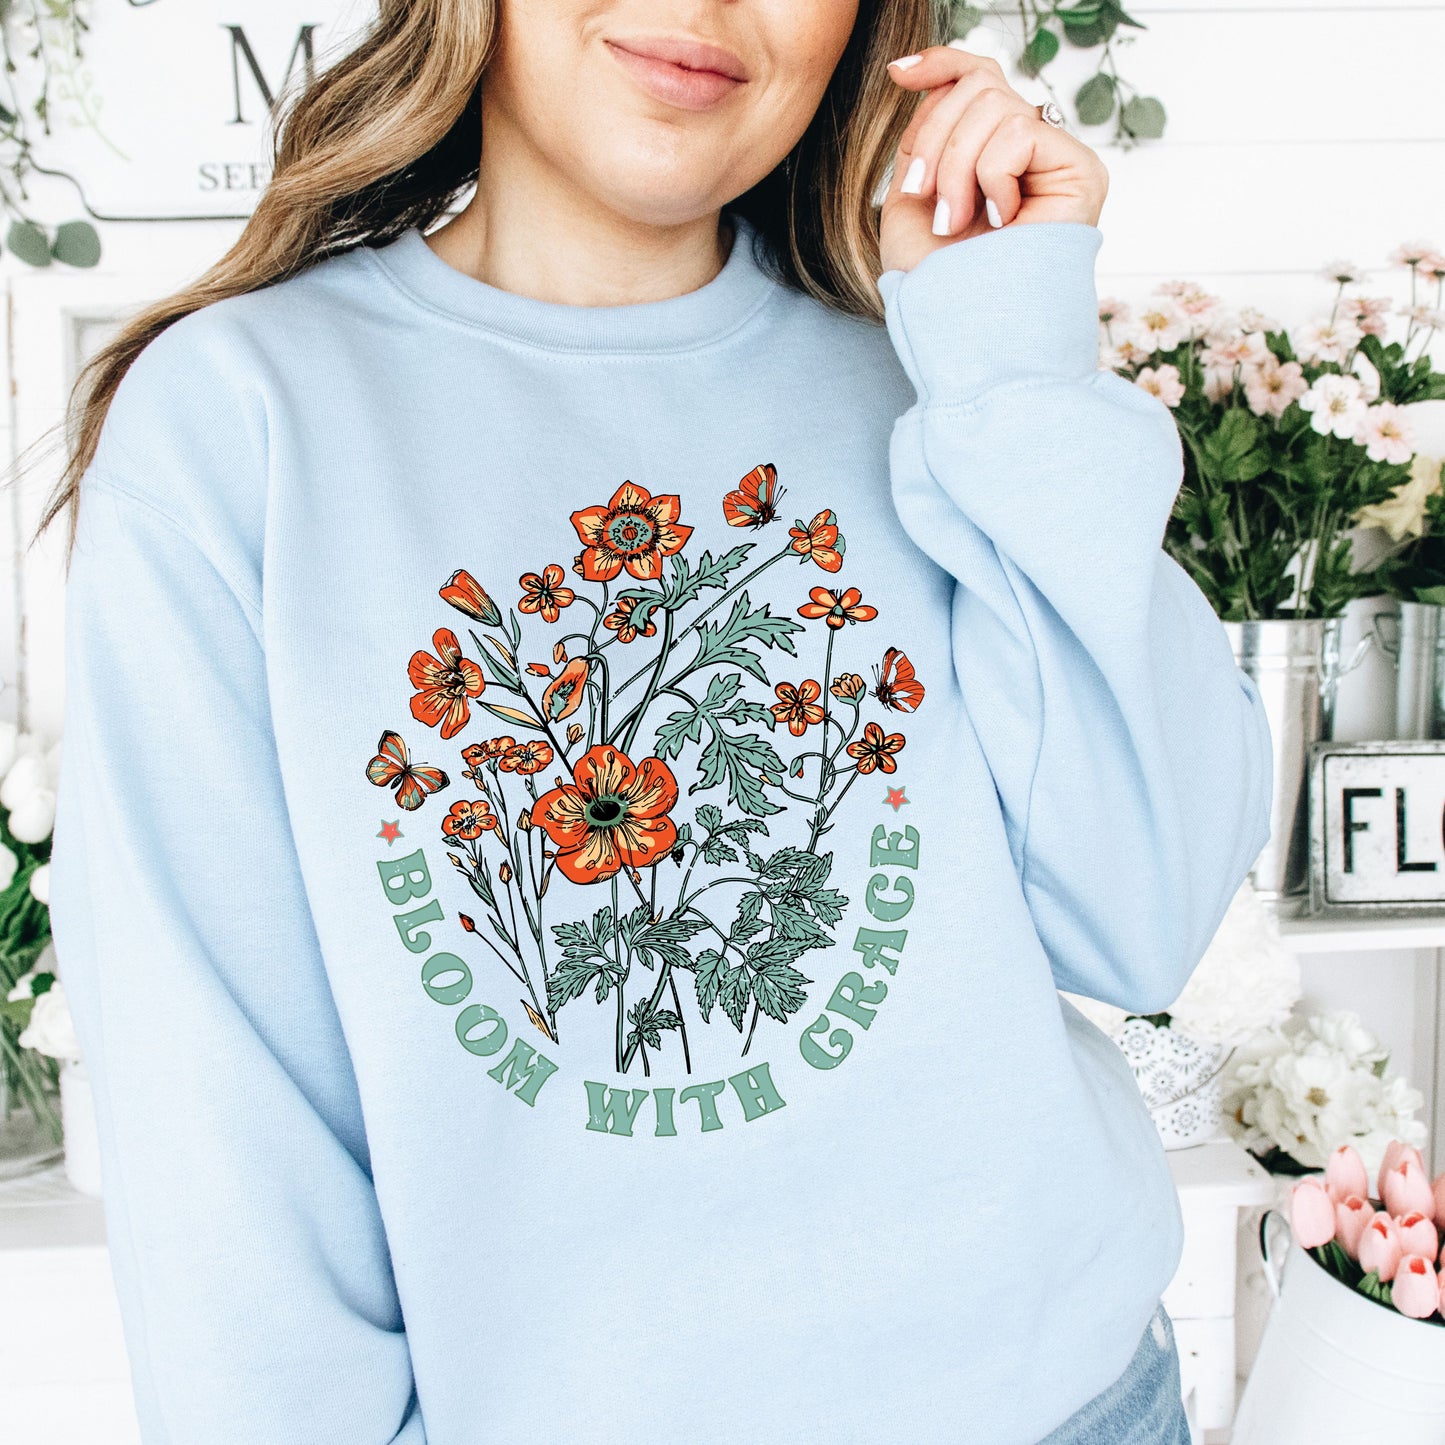 Bloom With Grace Sweatshirt